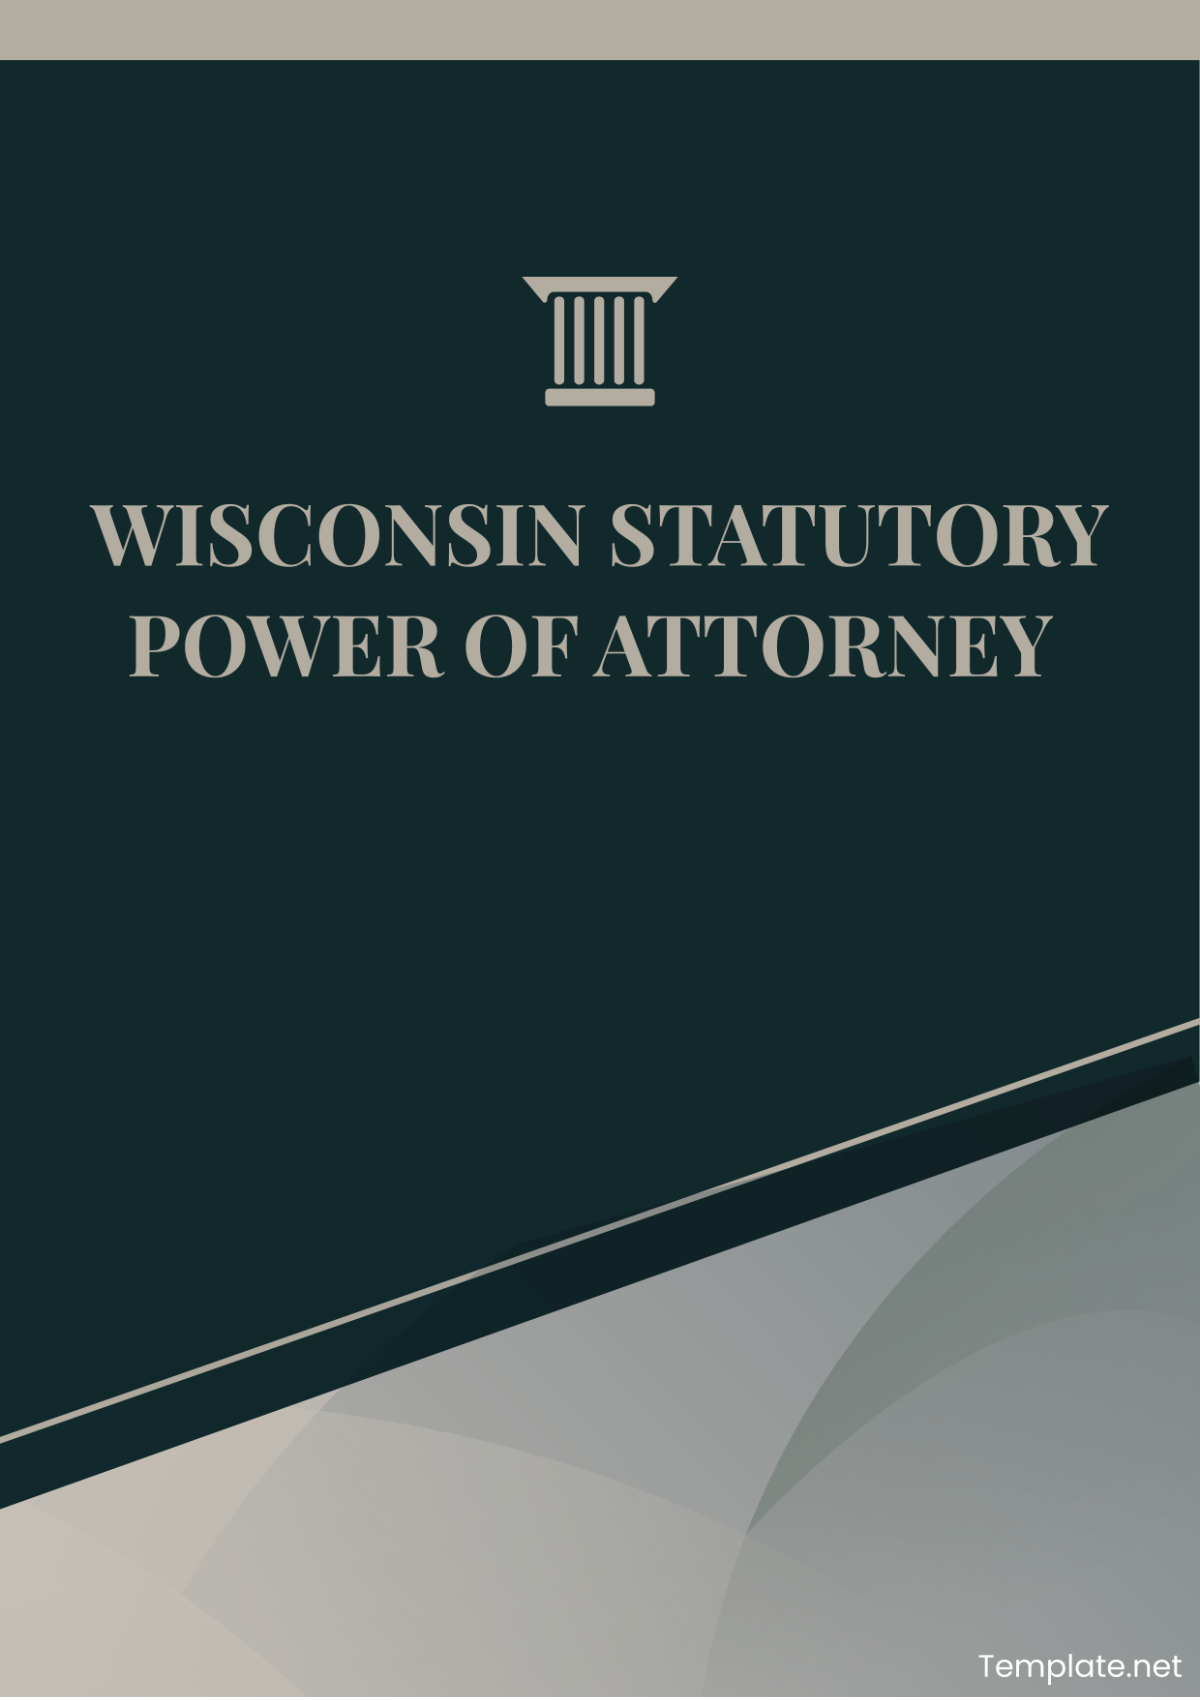 Free Wisconsin Statutory Power of Attorney Template